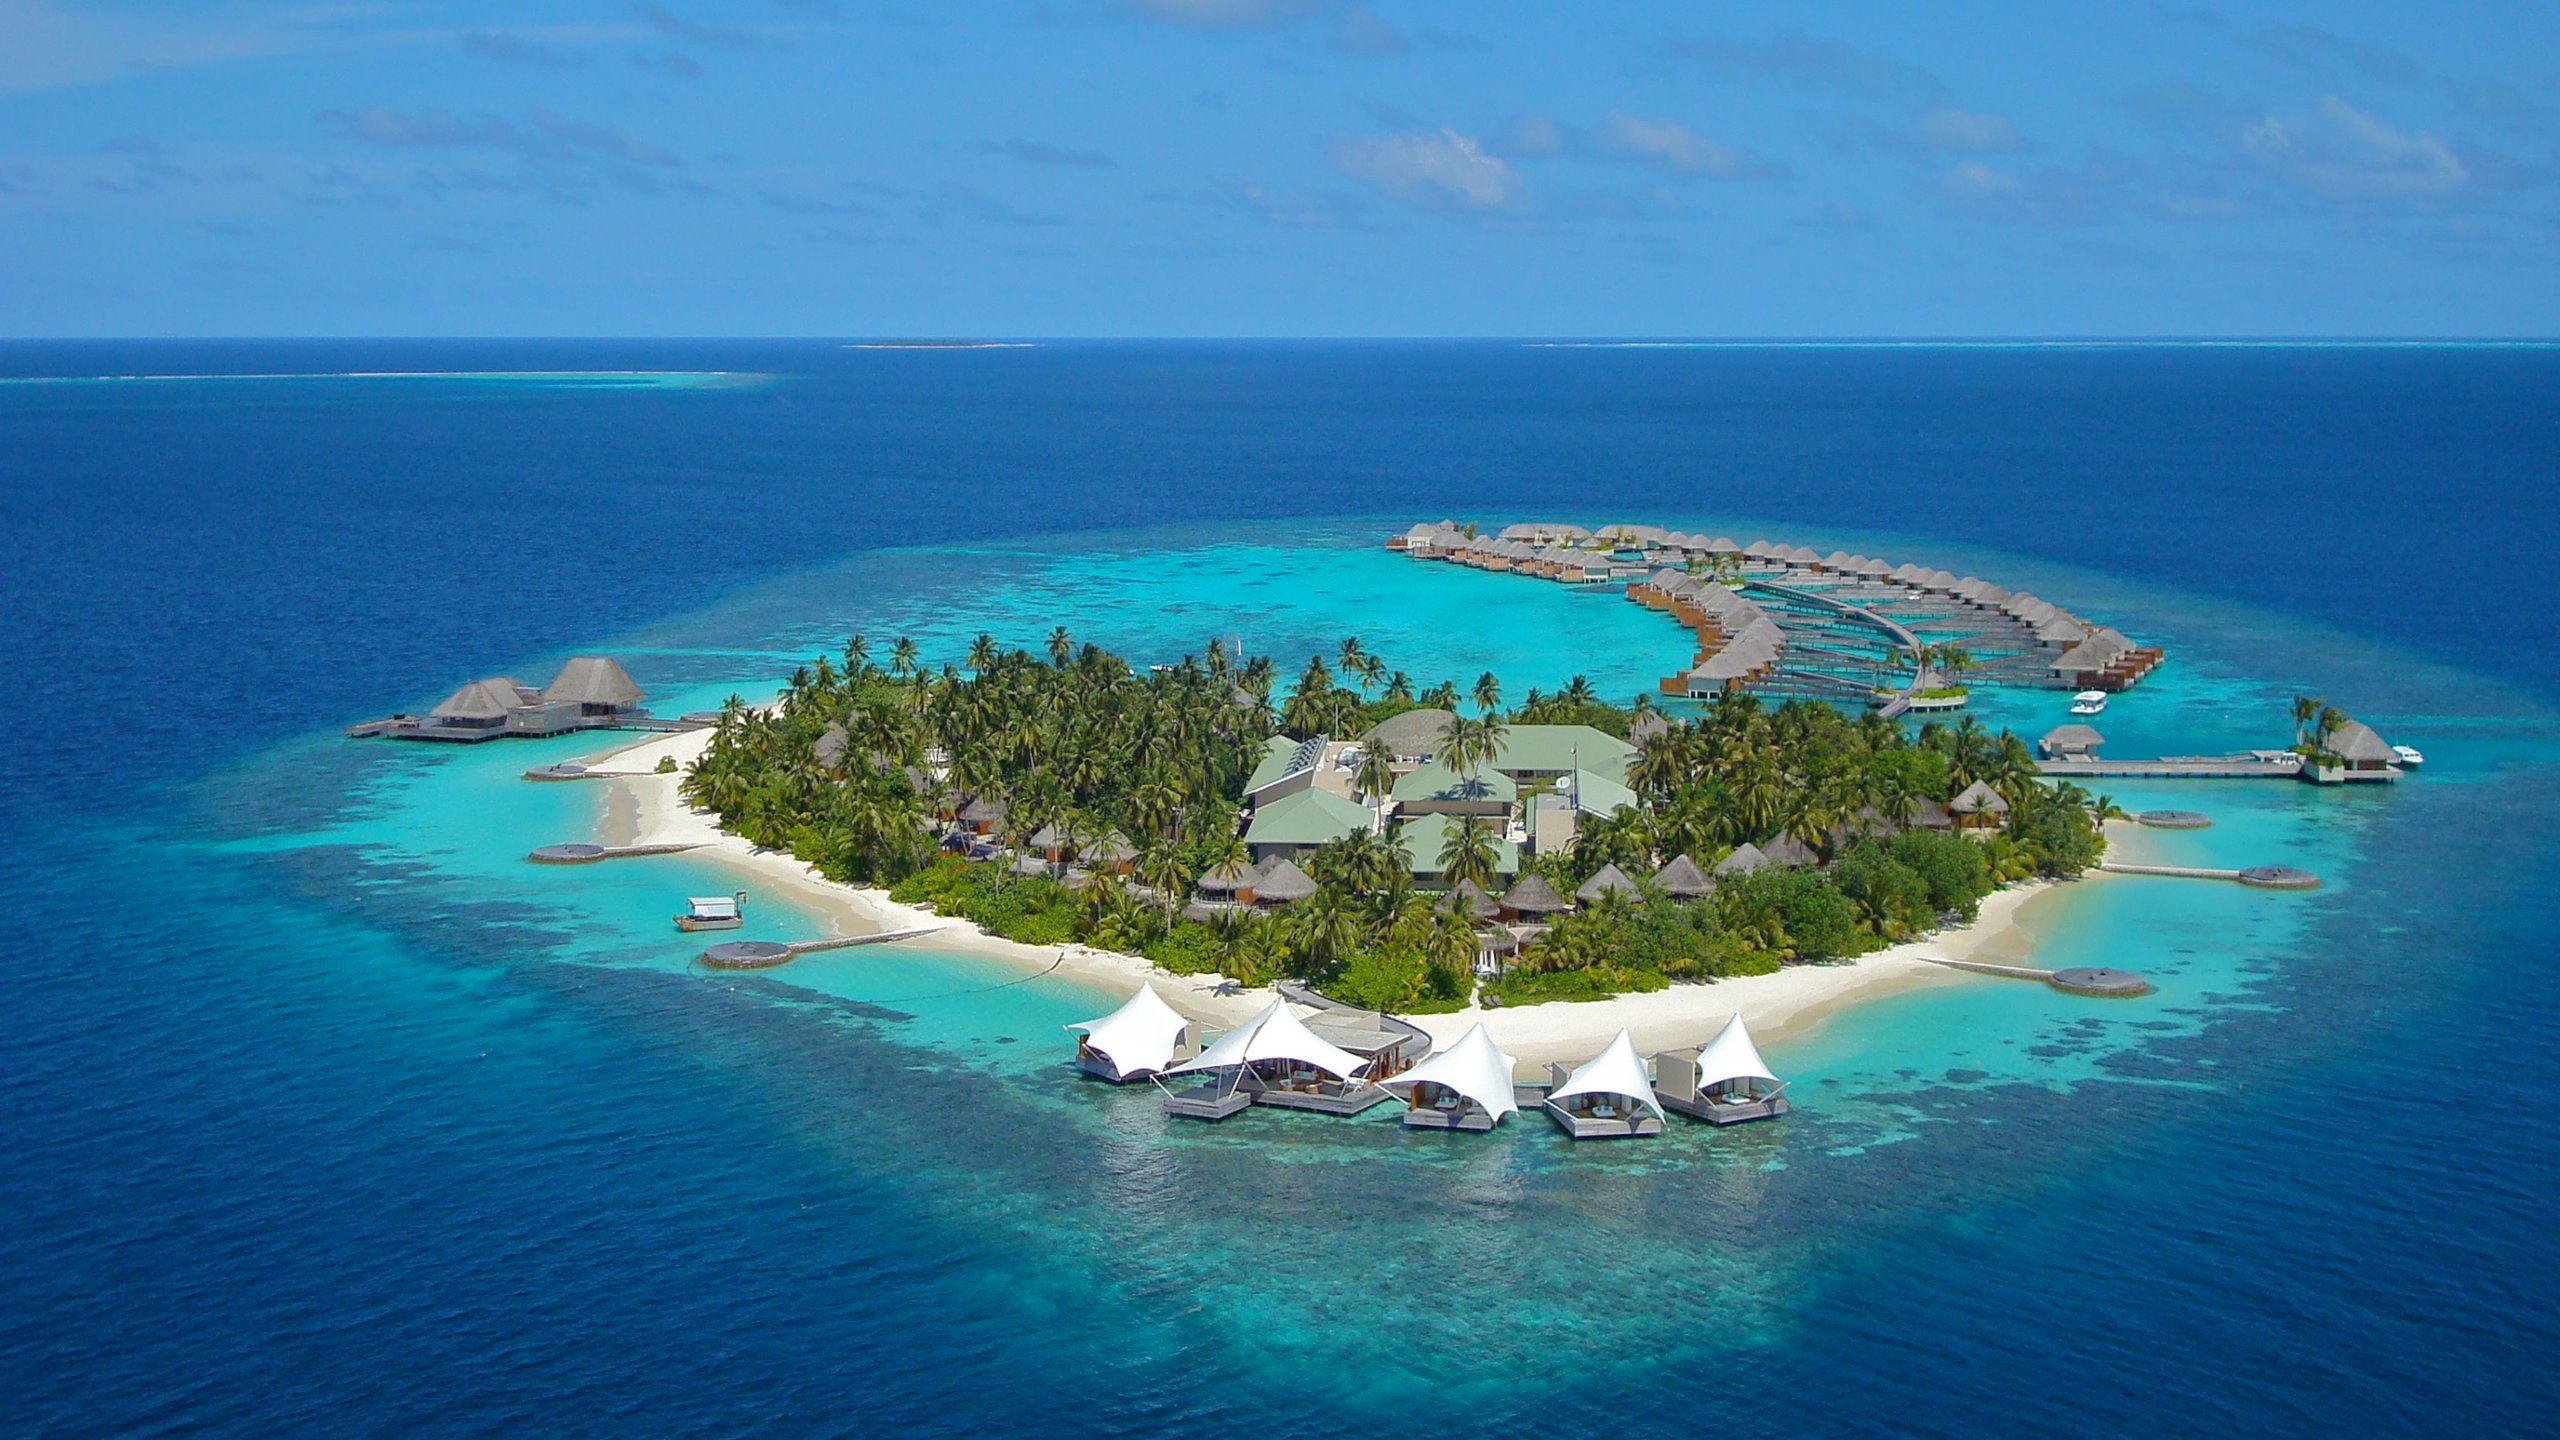 Bali
Maldives
Honeymoon
Destination